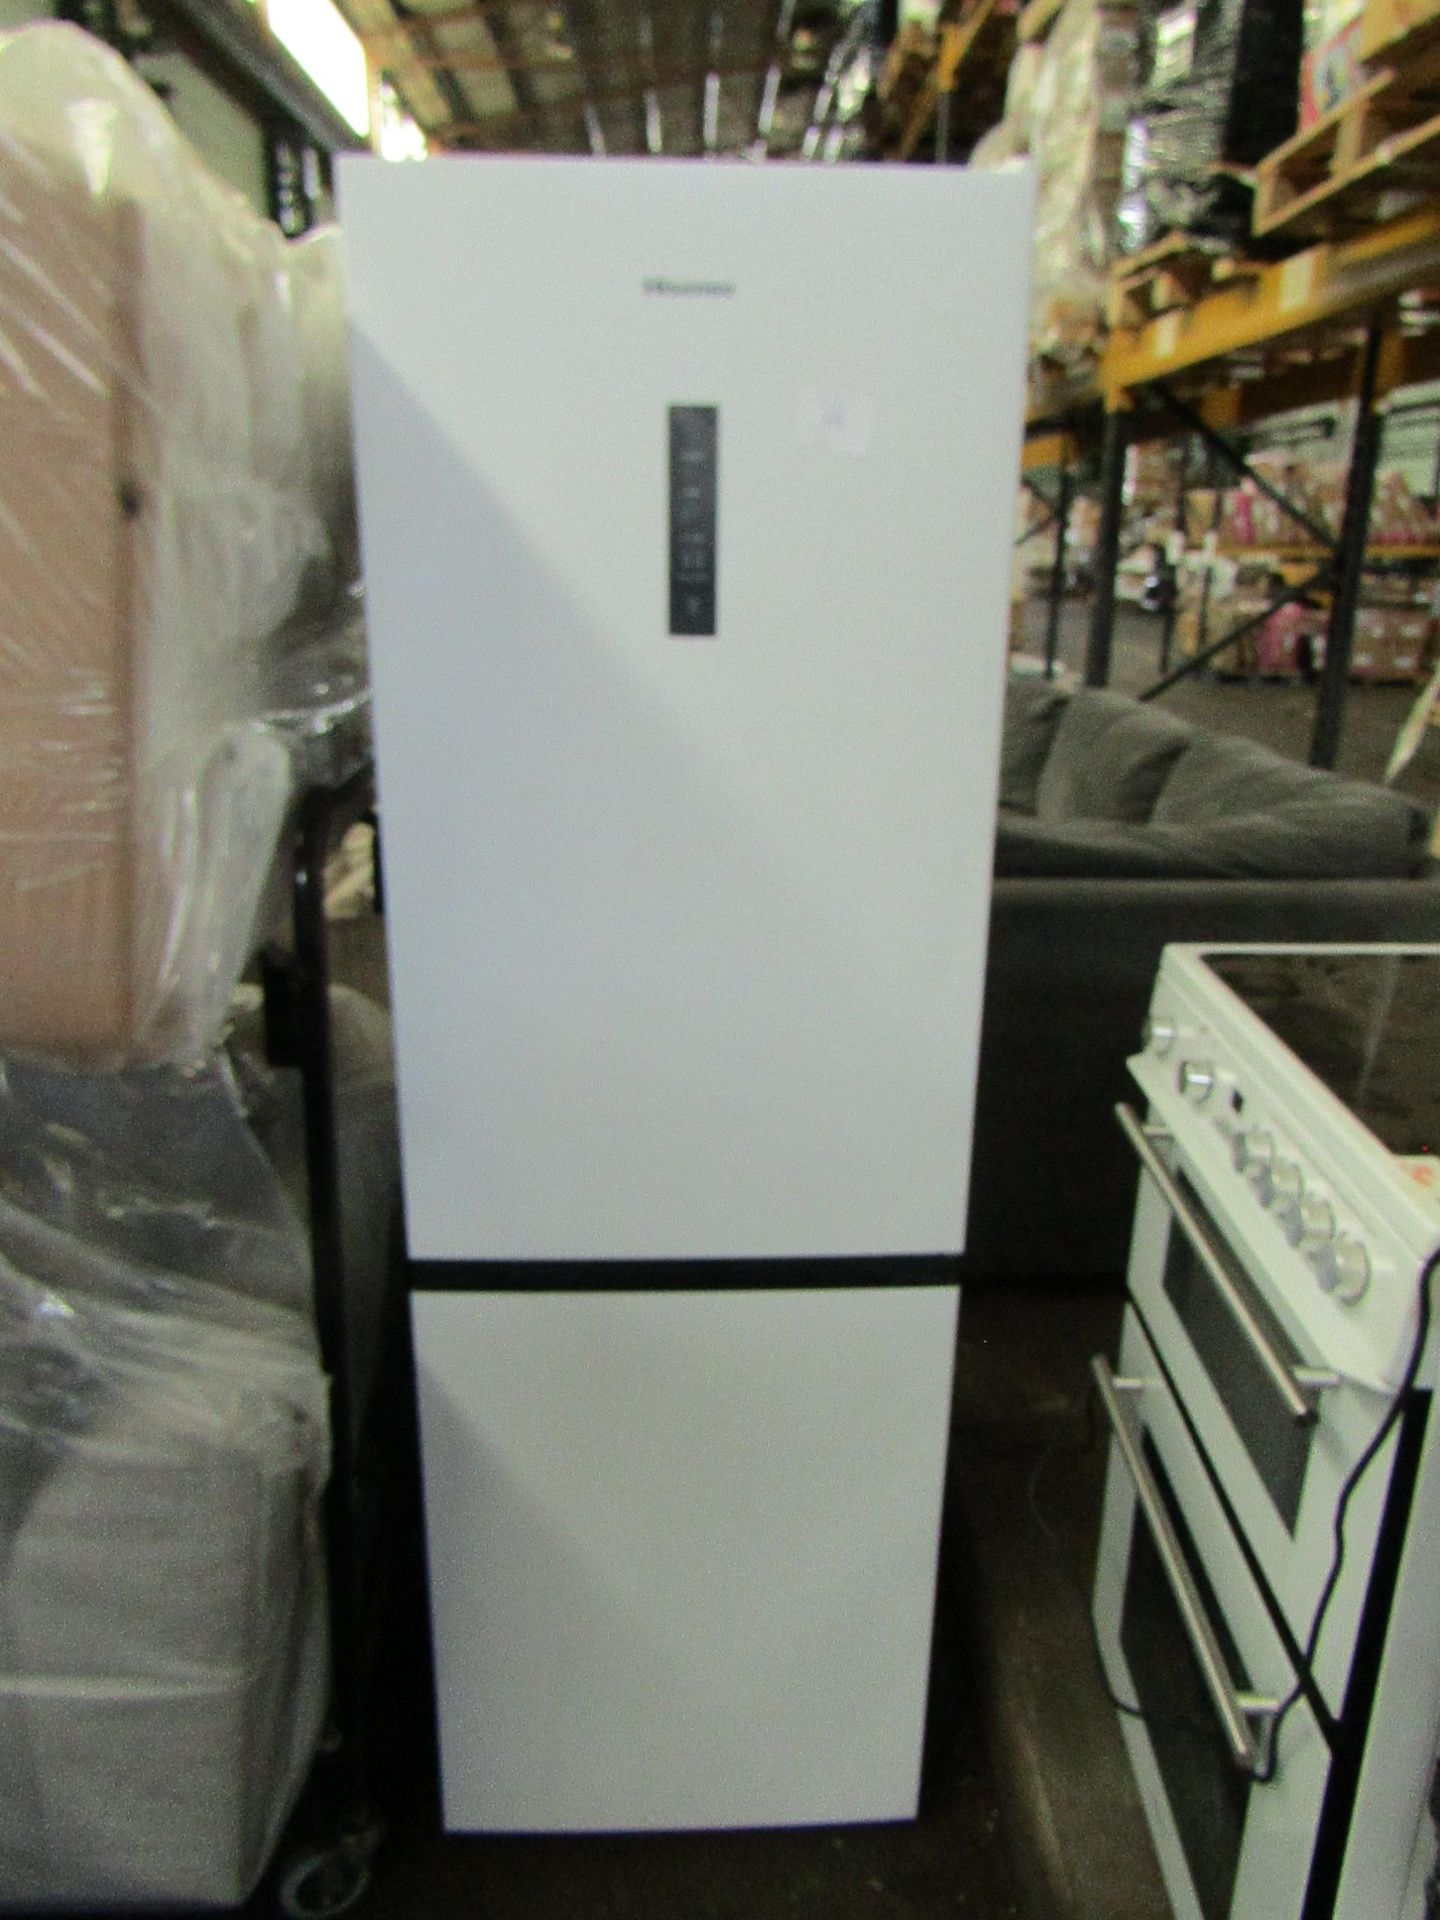 Hisense 60/40 fridge freezer, getting cold in both fridge and freezer, clean inside